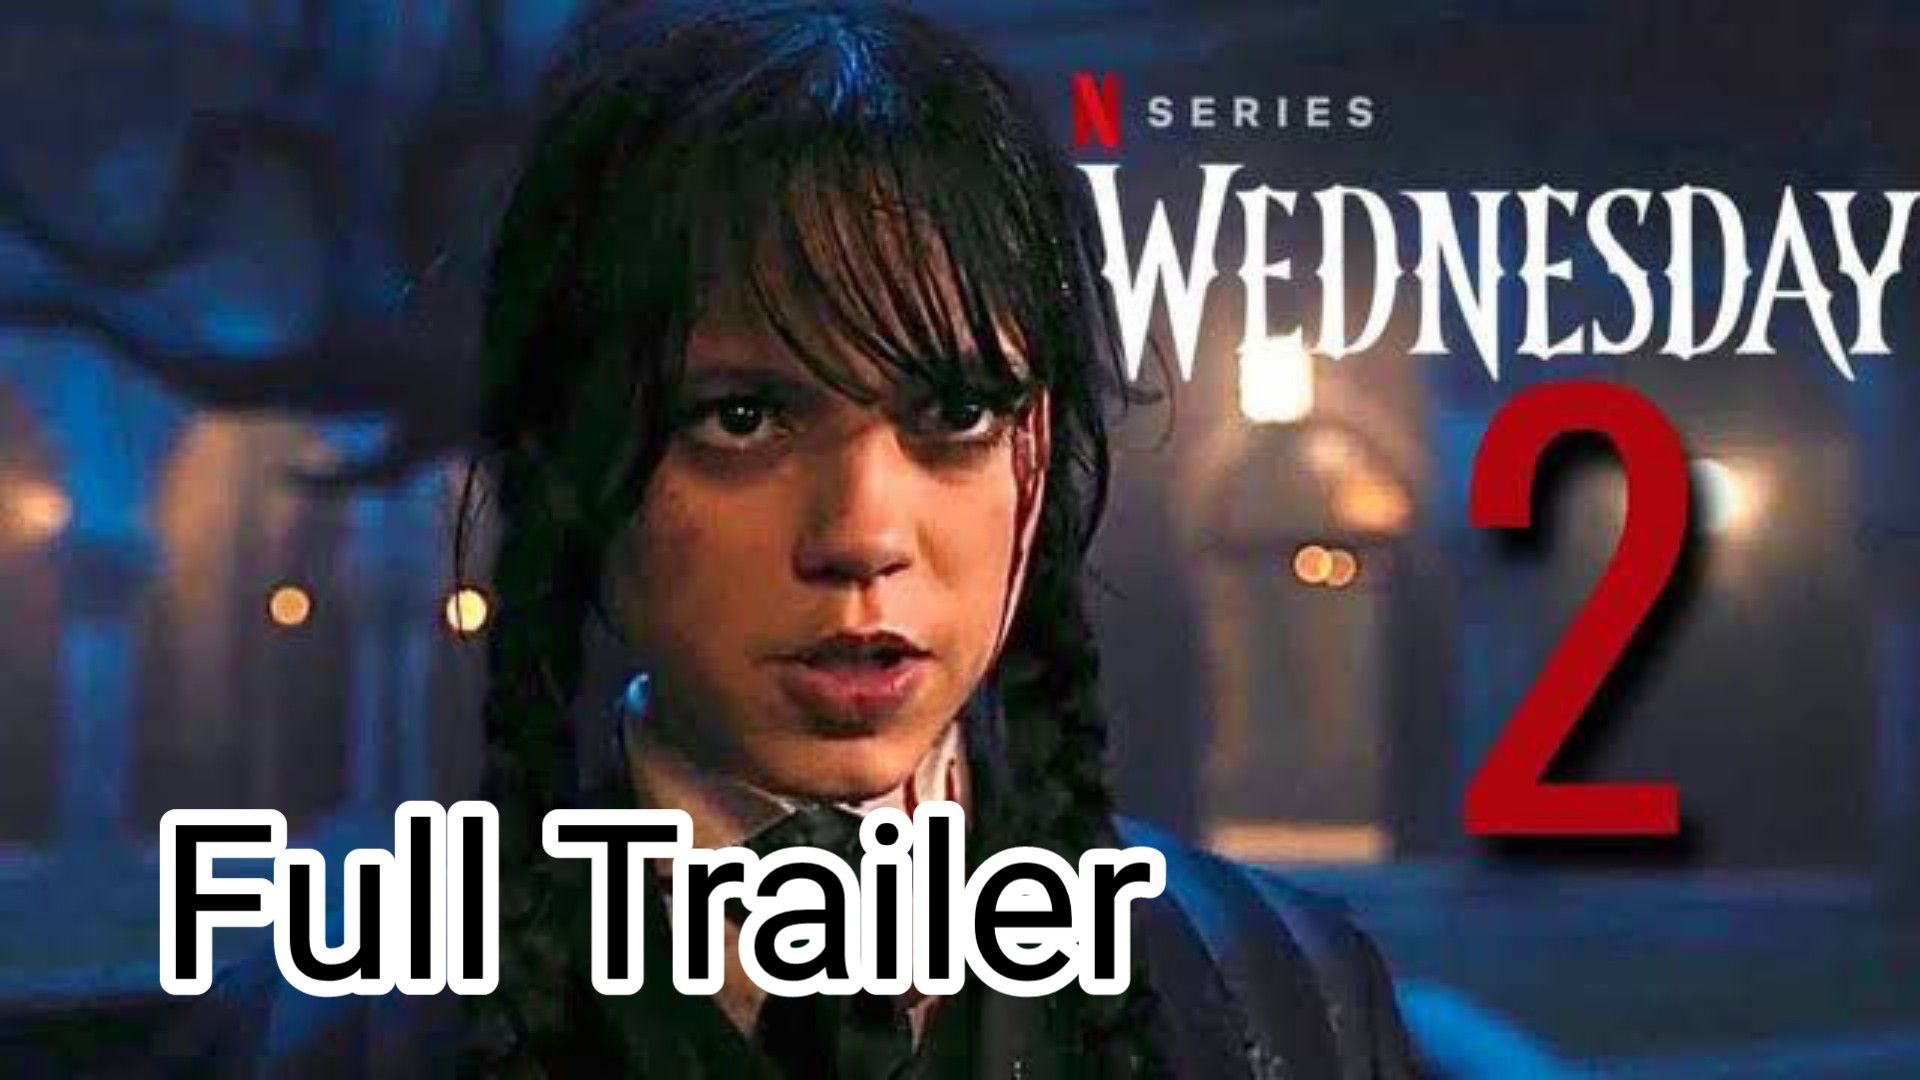 Wednesday Addams, Season 2, Full Trailer